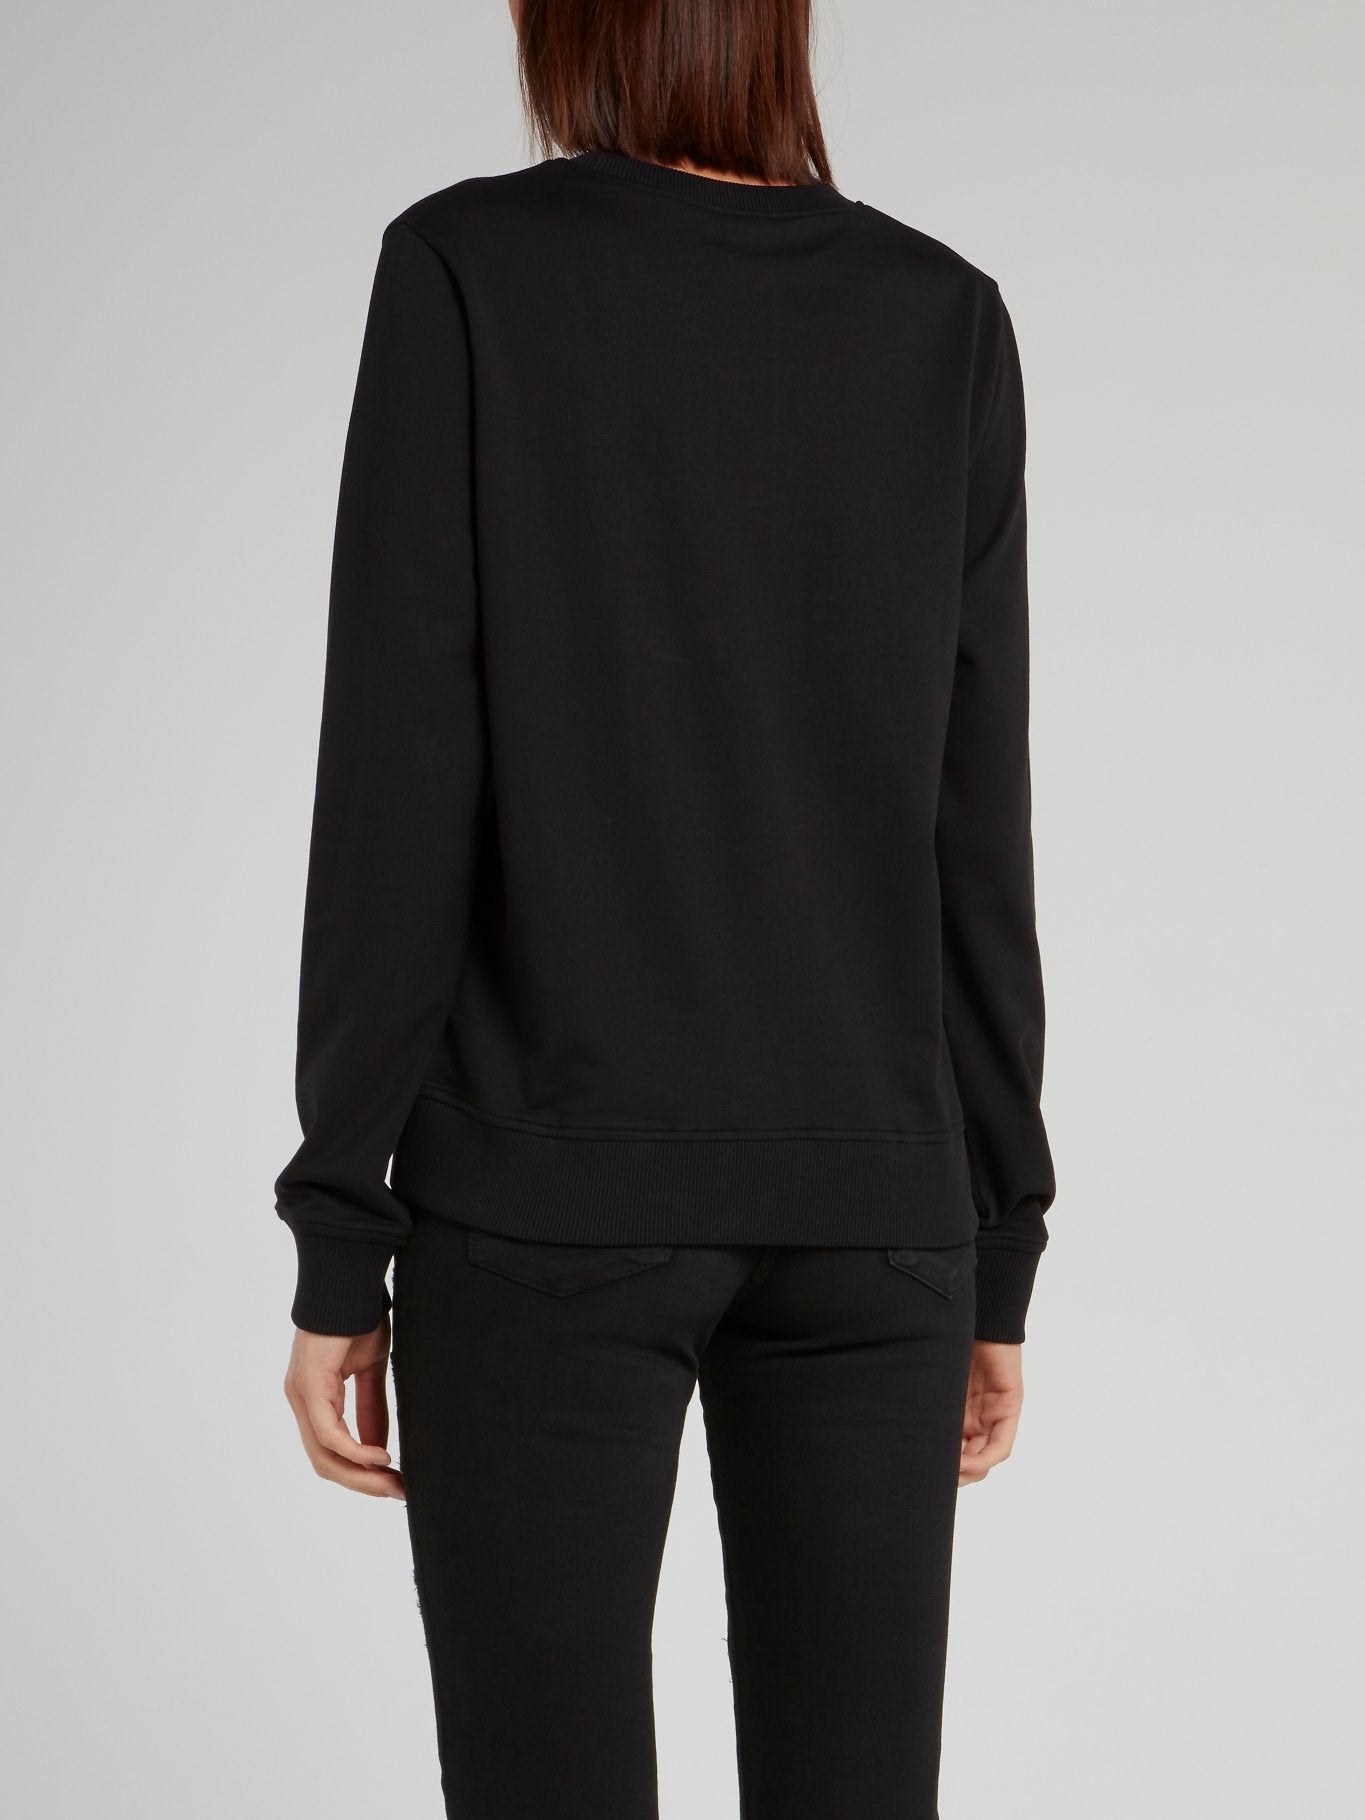 Black Crystal Embellished Sweatshirt